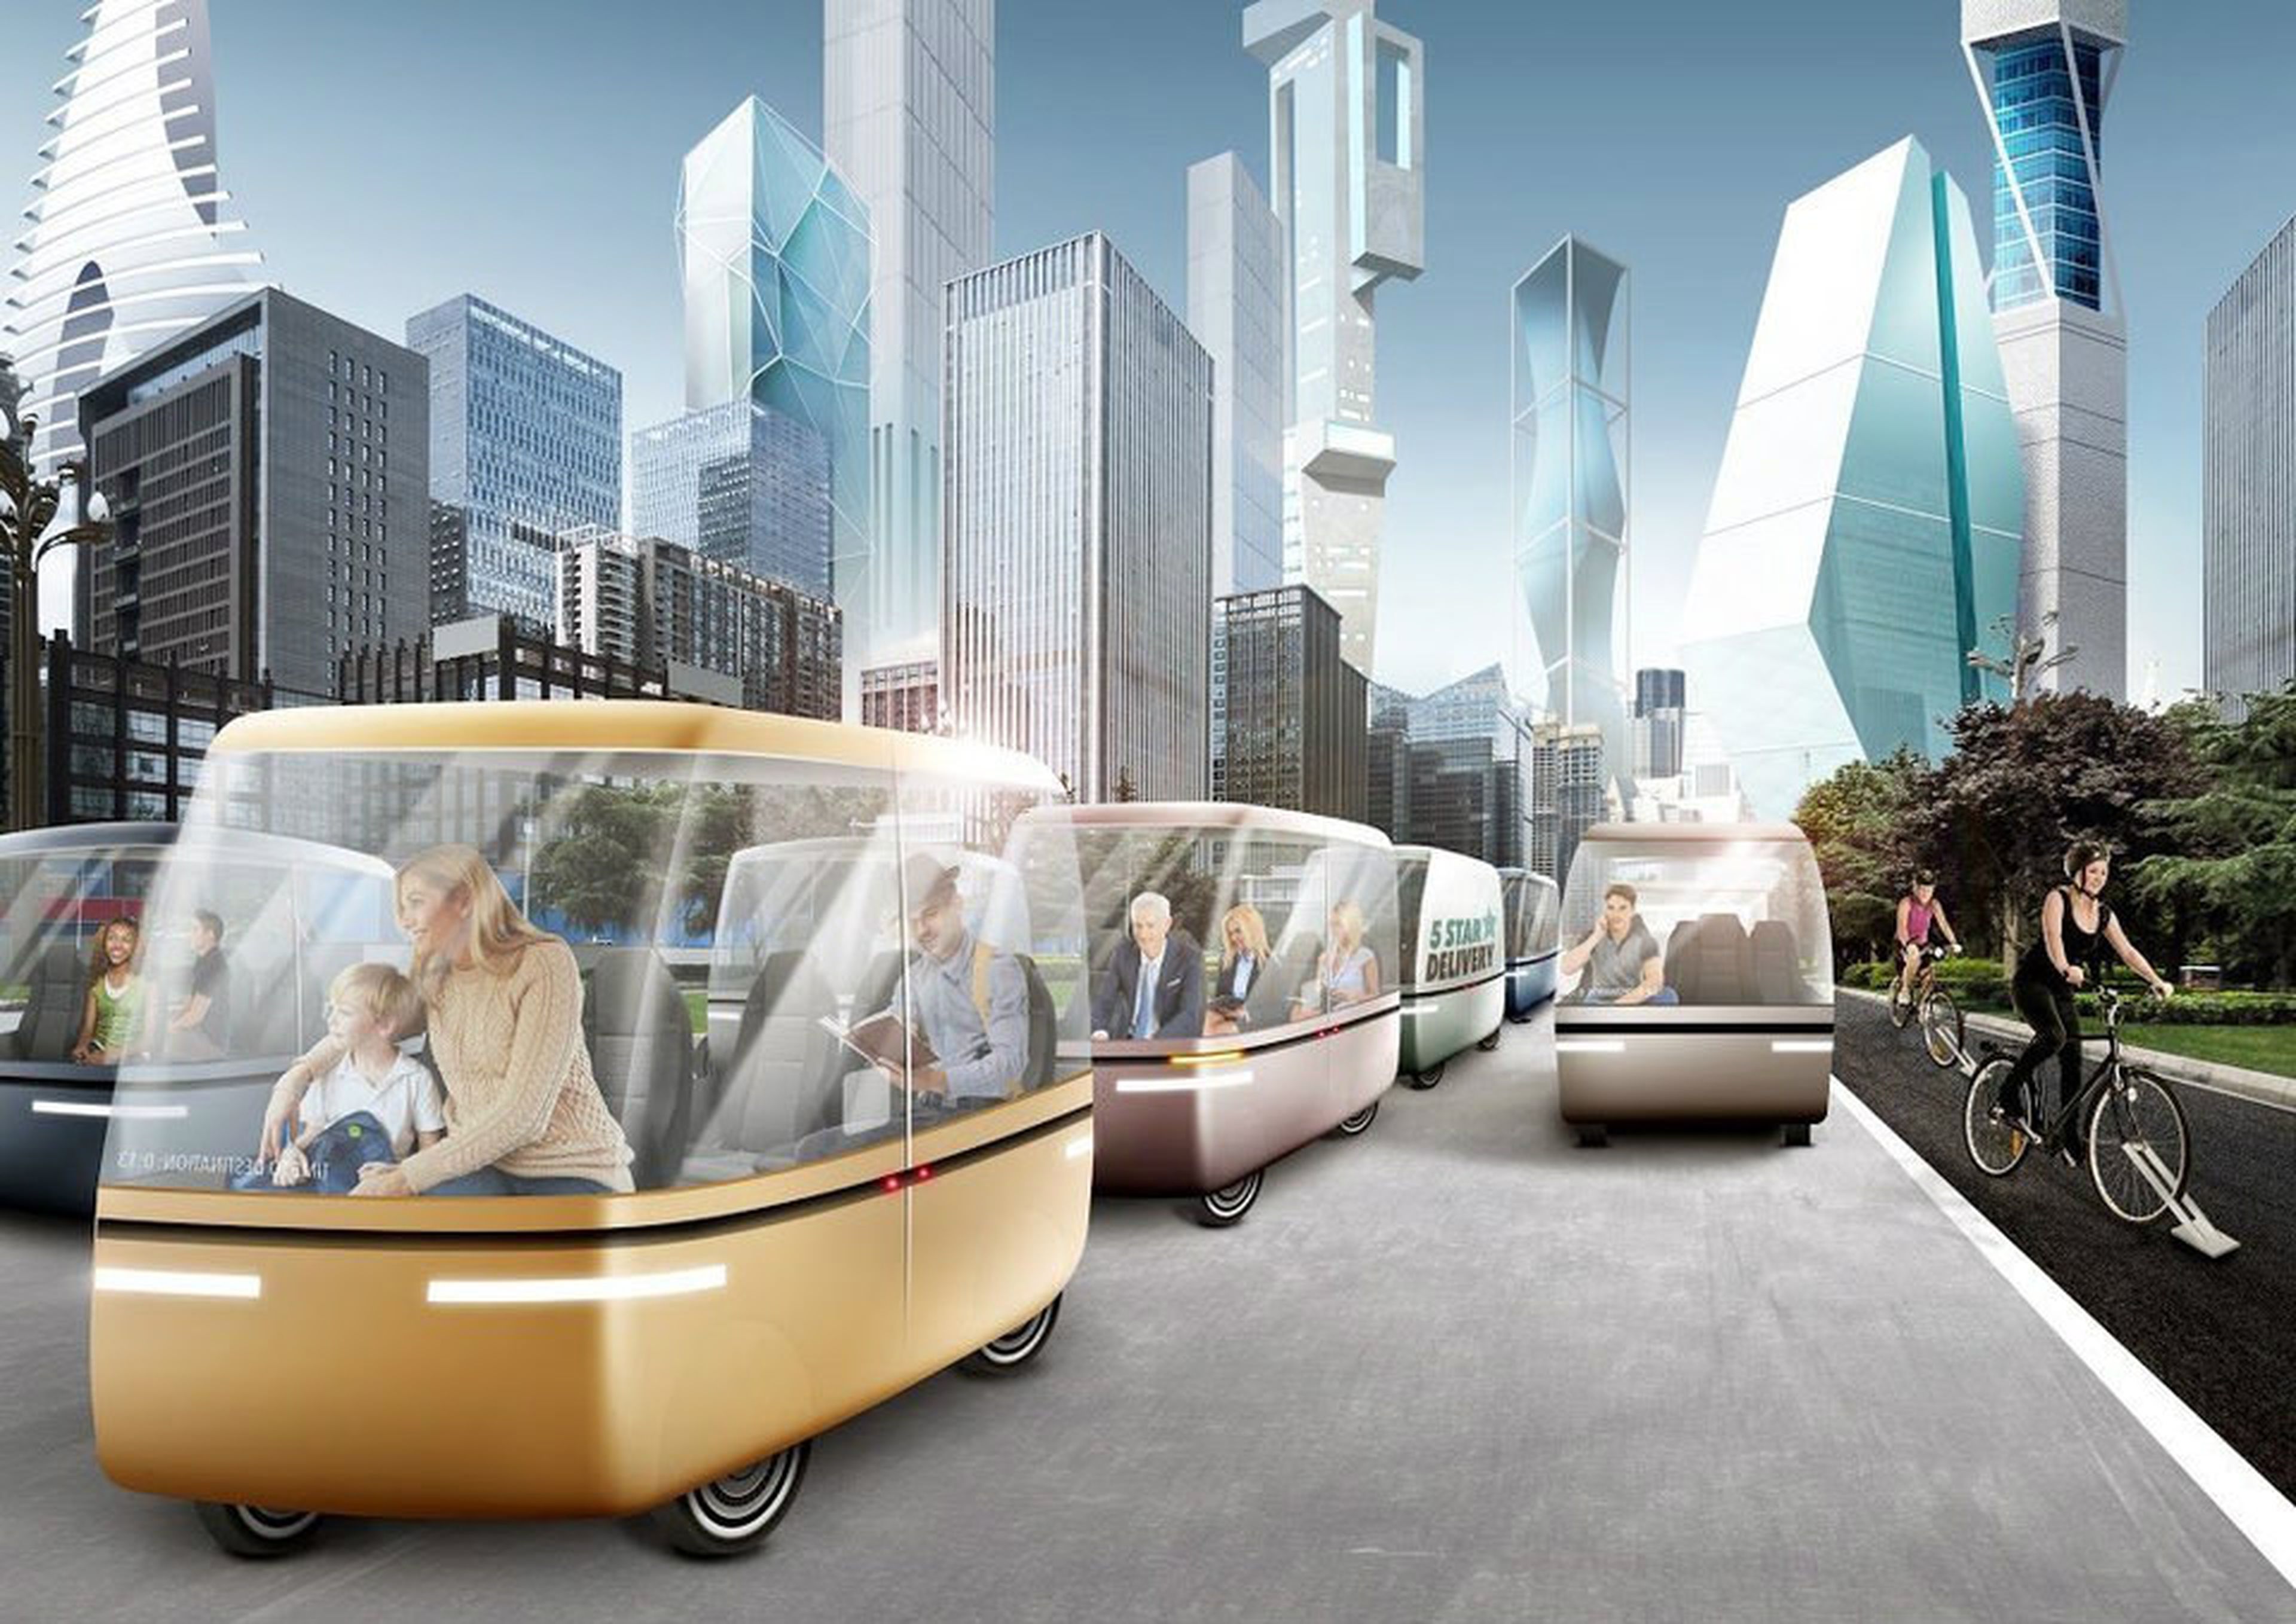 Travelling modern life is. Транспорт будущего. Город будущего транспорт. Картинки будущего. Инновации в транспорте.